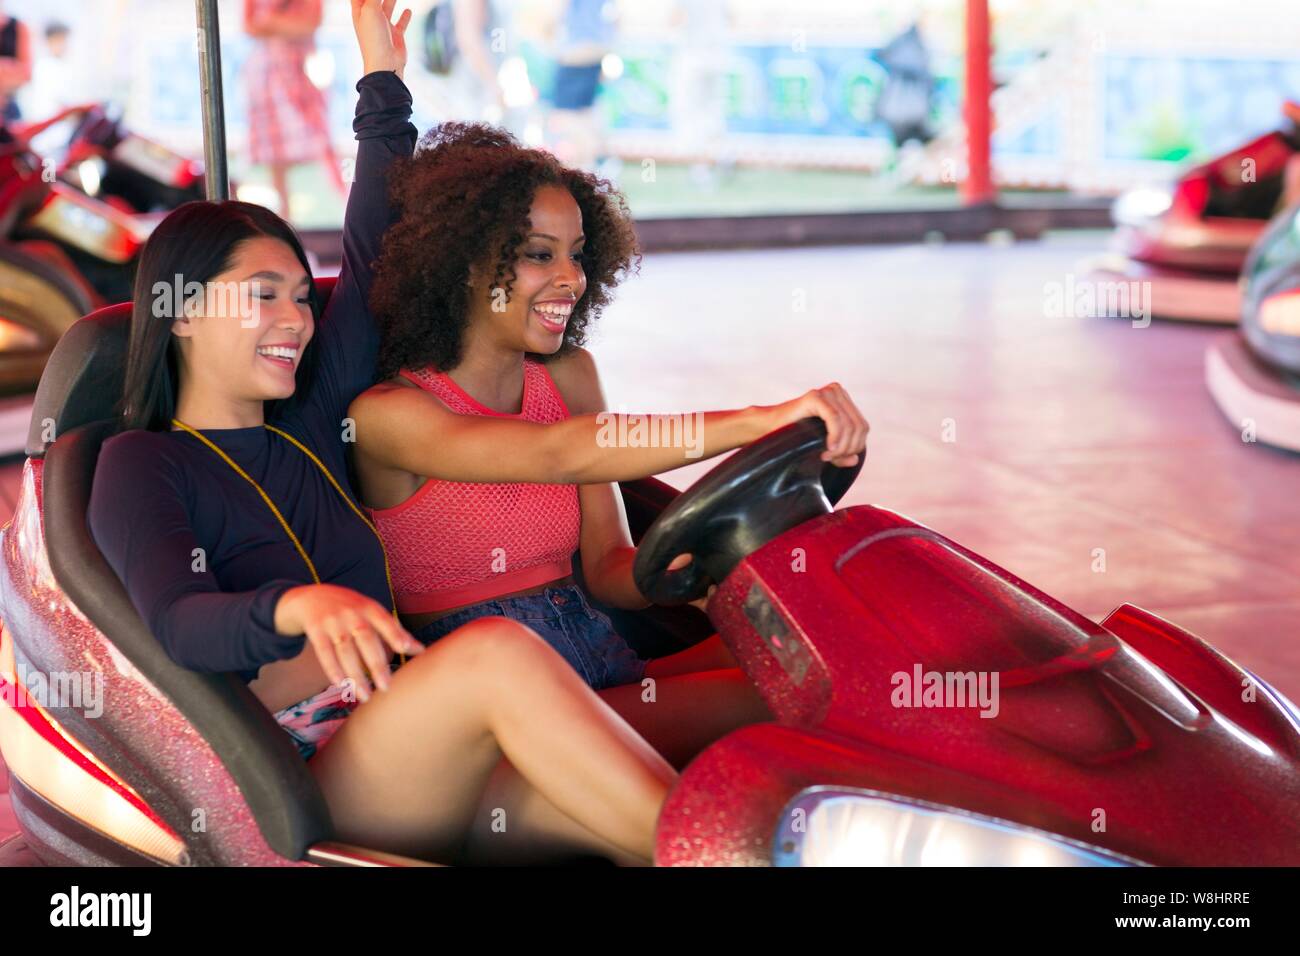 Two young women on bumper car at fun fair. Stock Photo